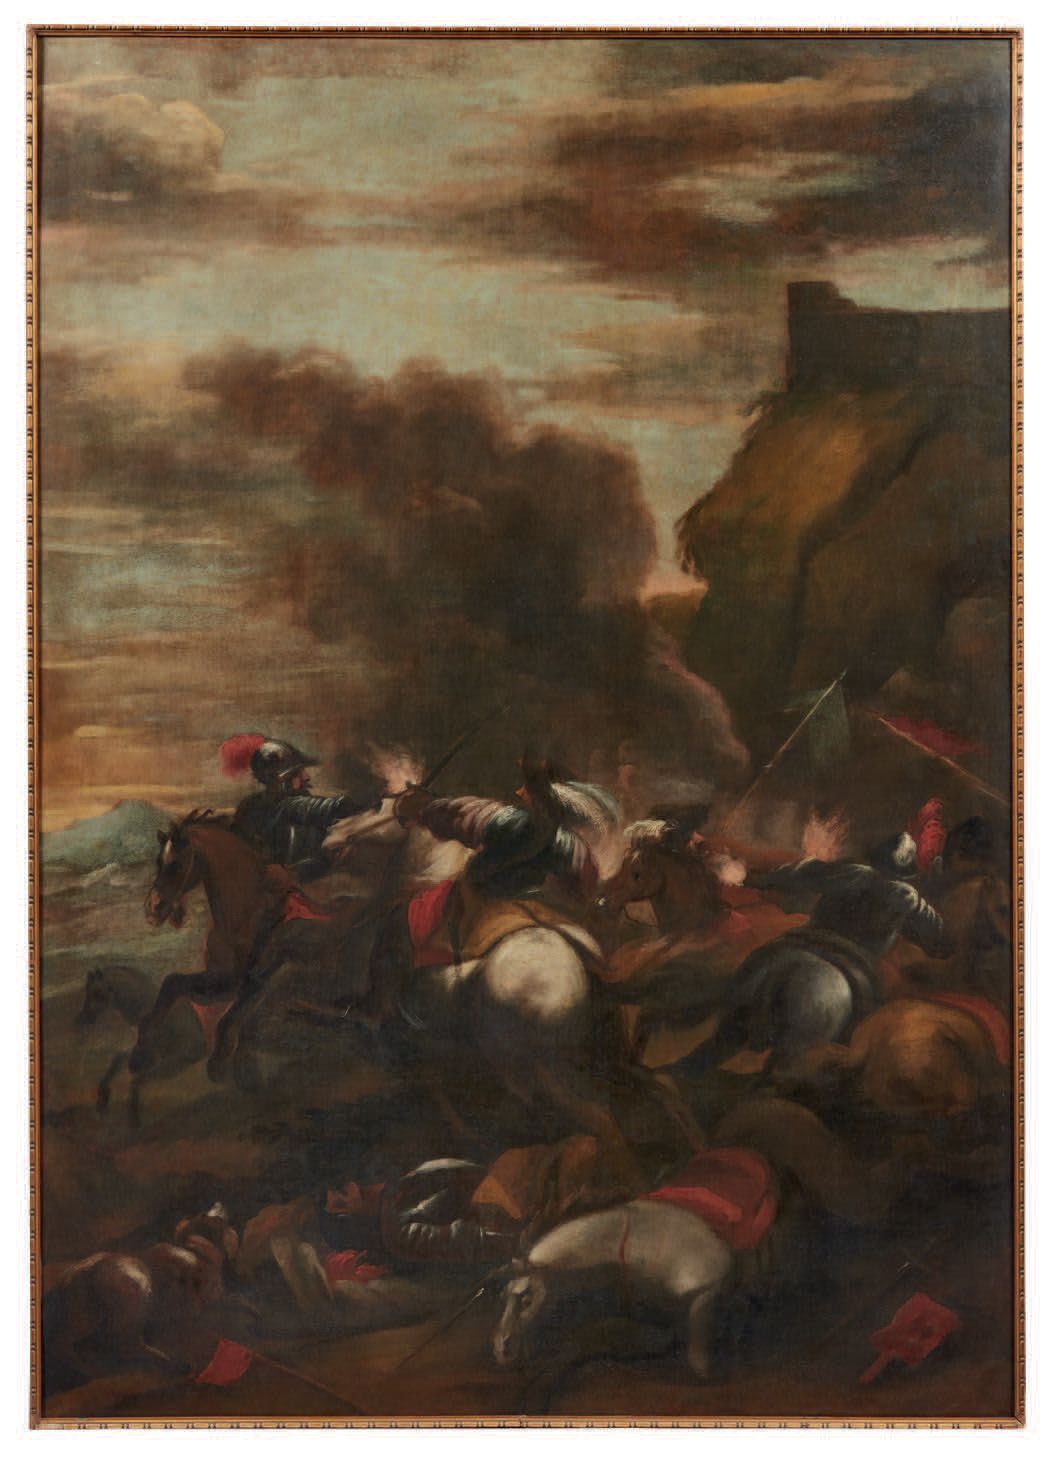 Pittore del XVII/XVIII secolo 
Par de escenas de batalla
Óleo sobre lienzo
École&hellip;